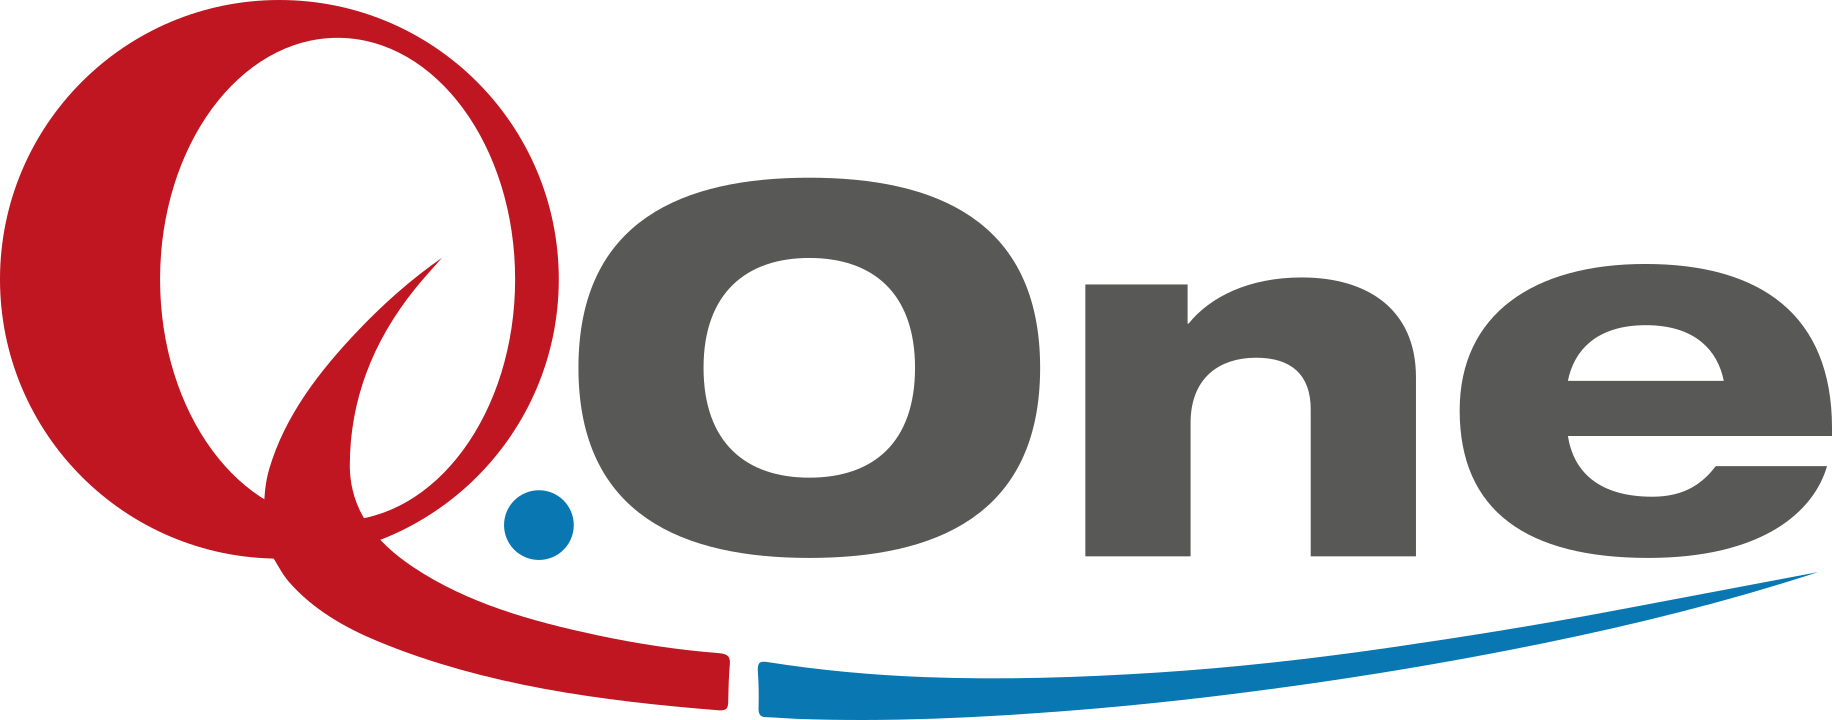 QONE_logo.png